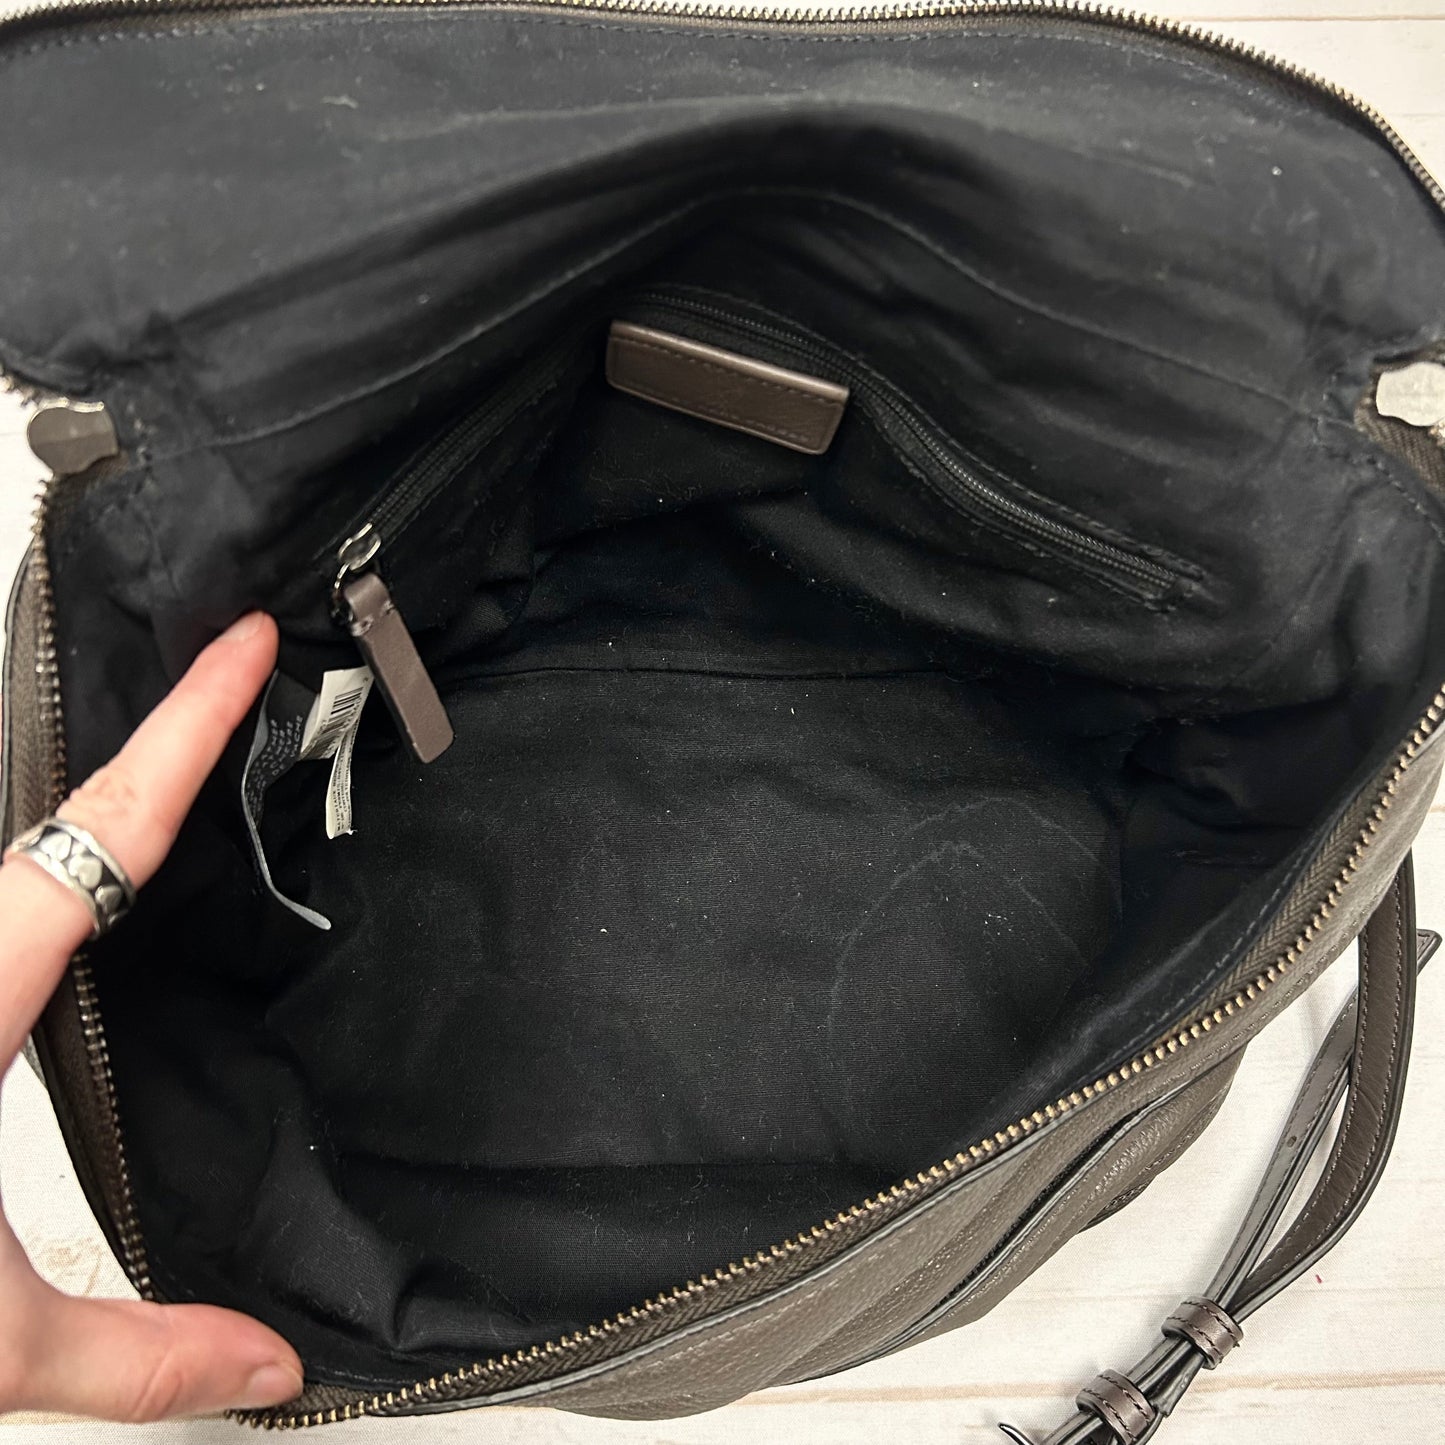 Handbag Designer By Marc By Marc Jacobs, Size: Medium